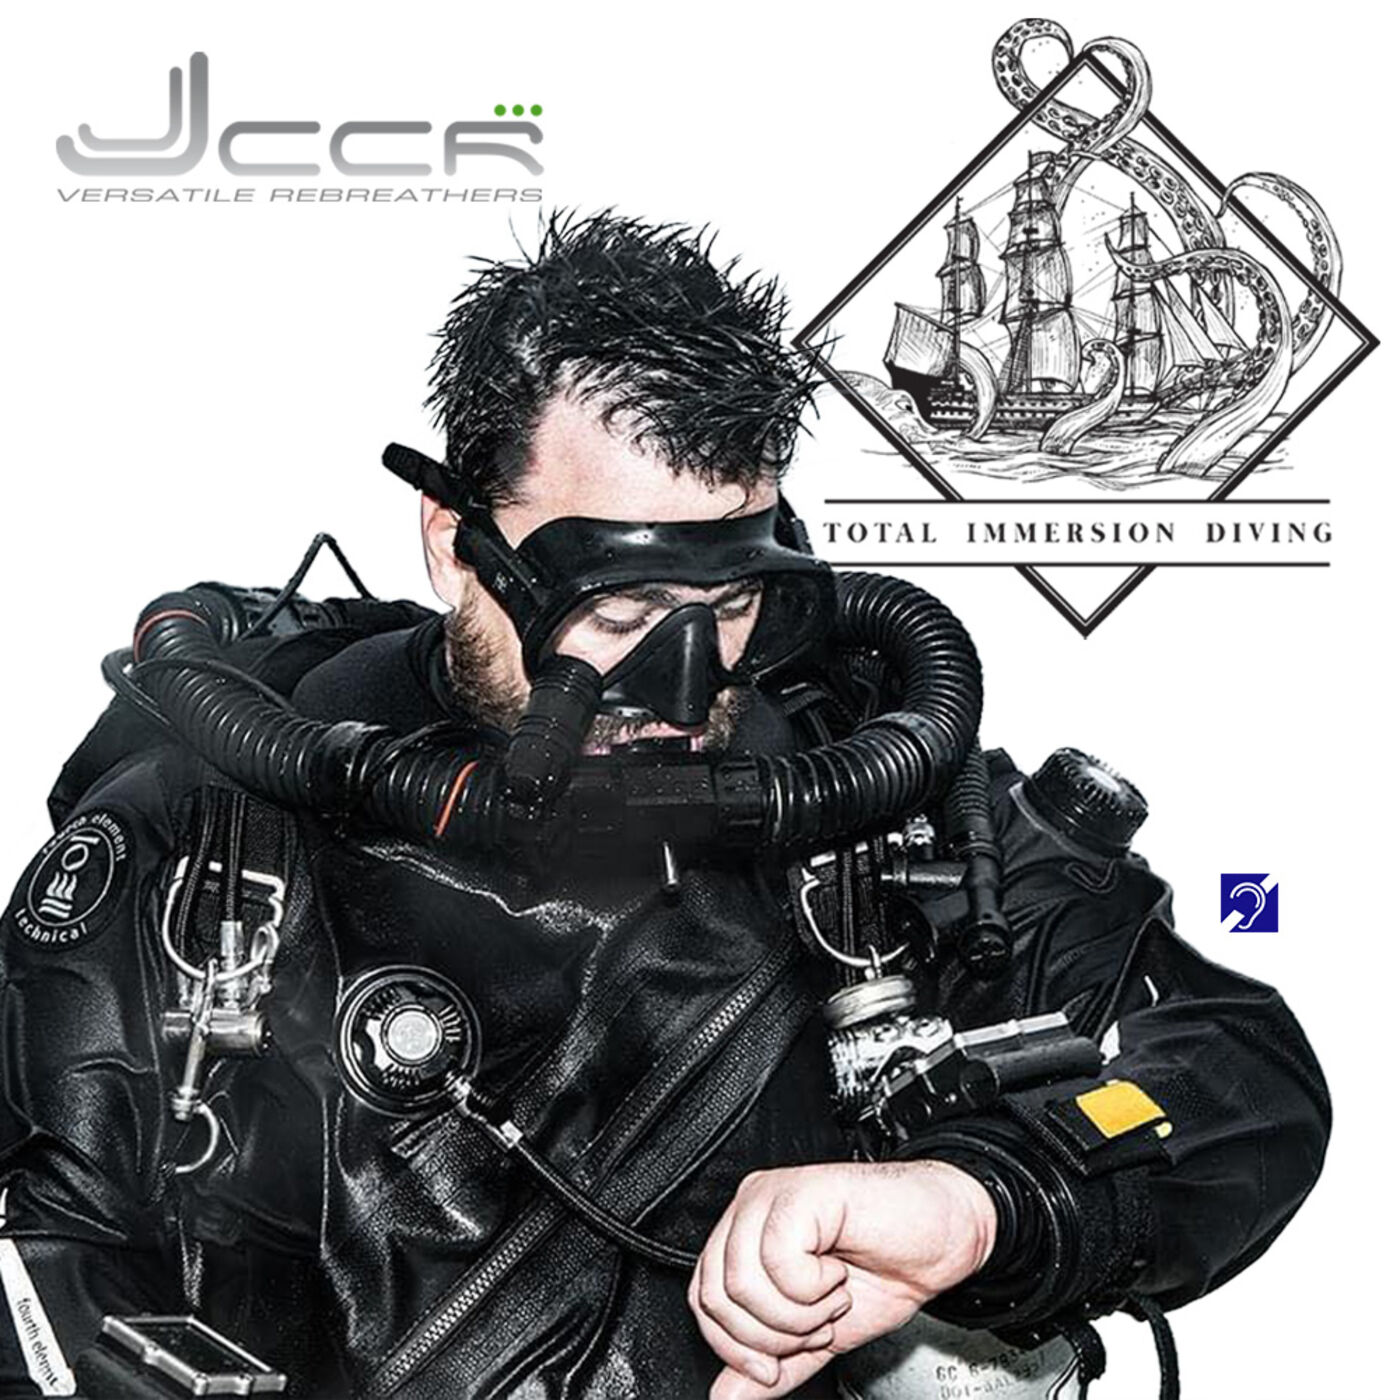 Ryan Duchatel - Total Immersion Diving & JJ CCR's - S02 E17